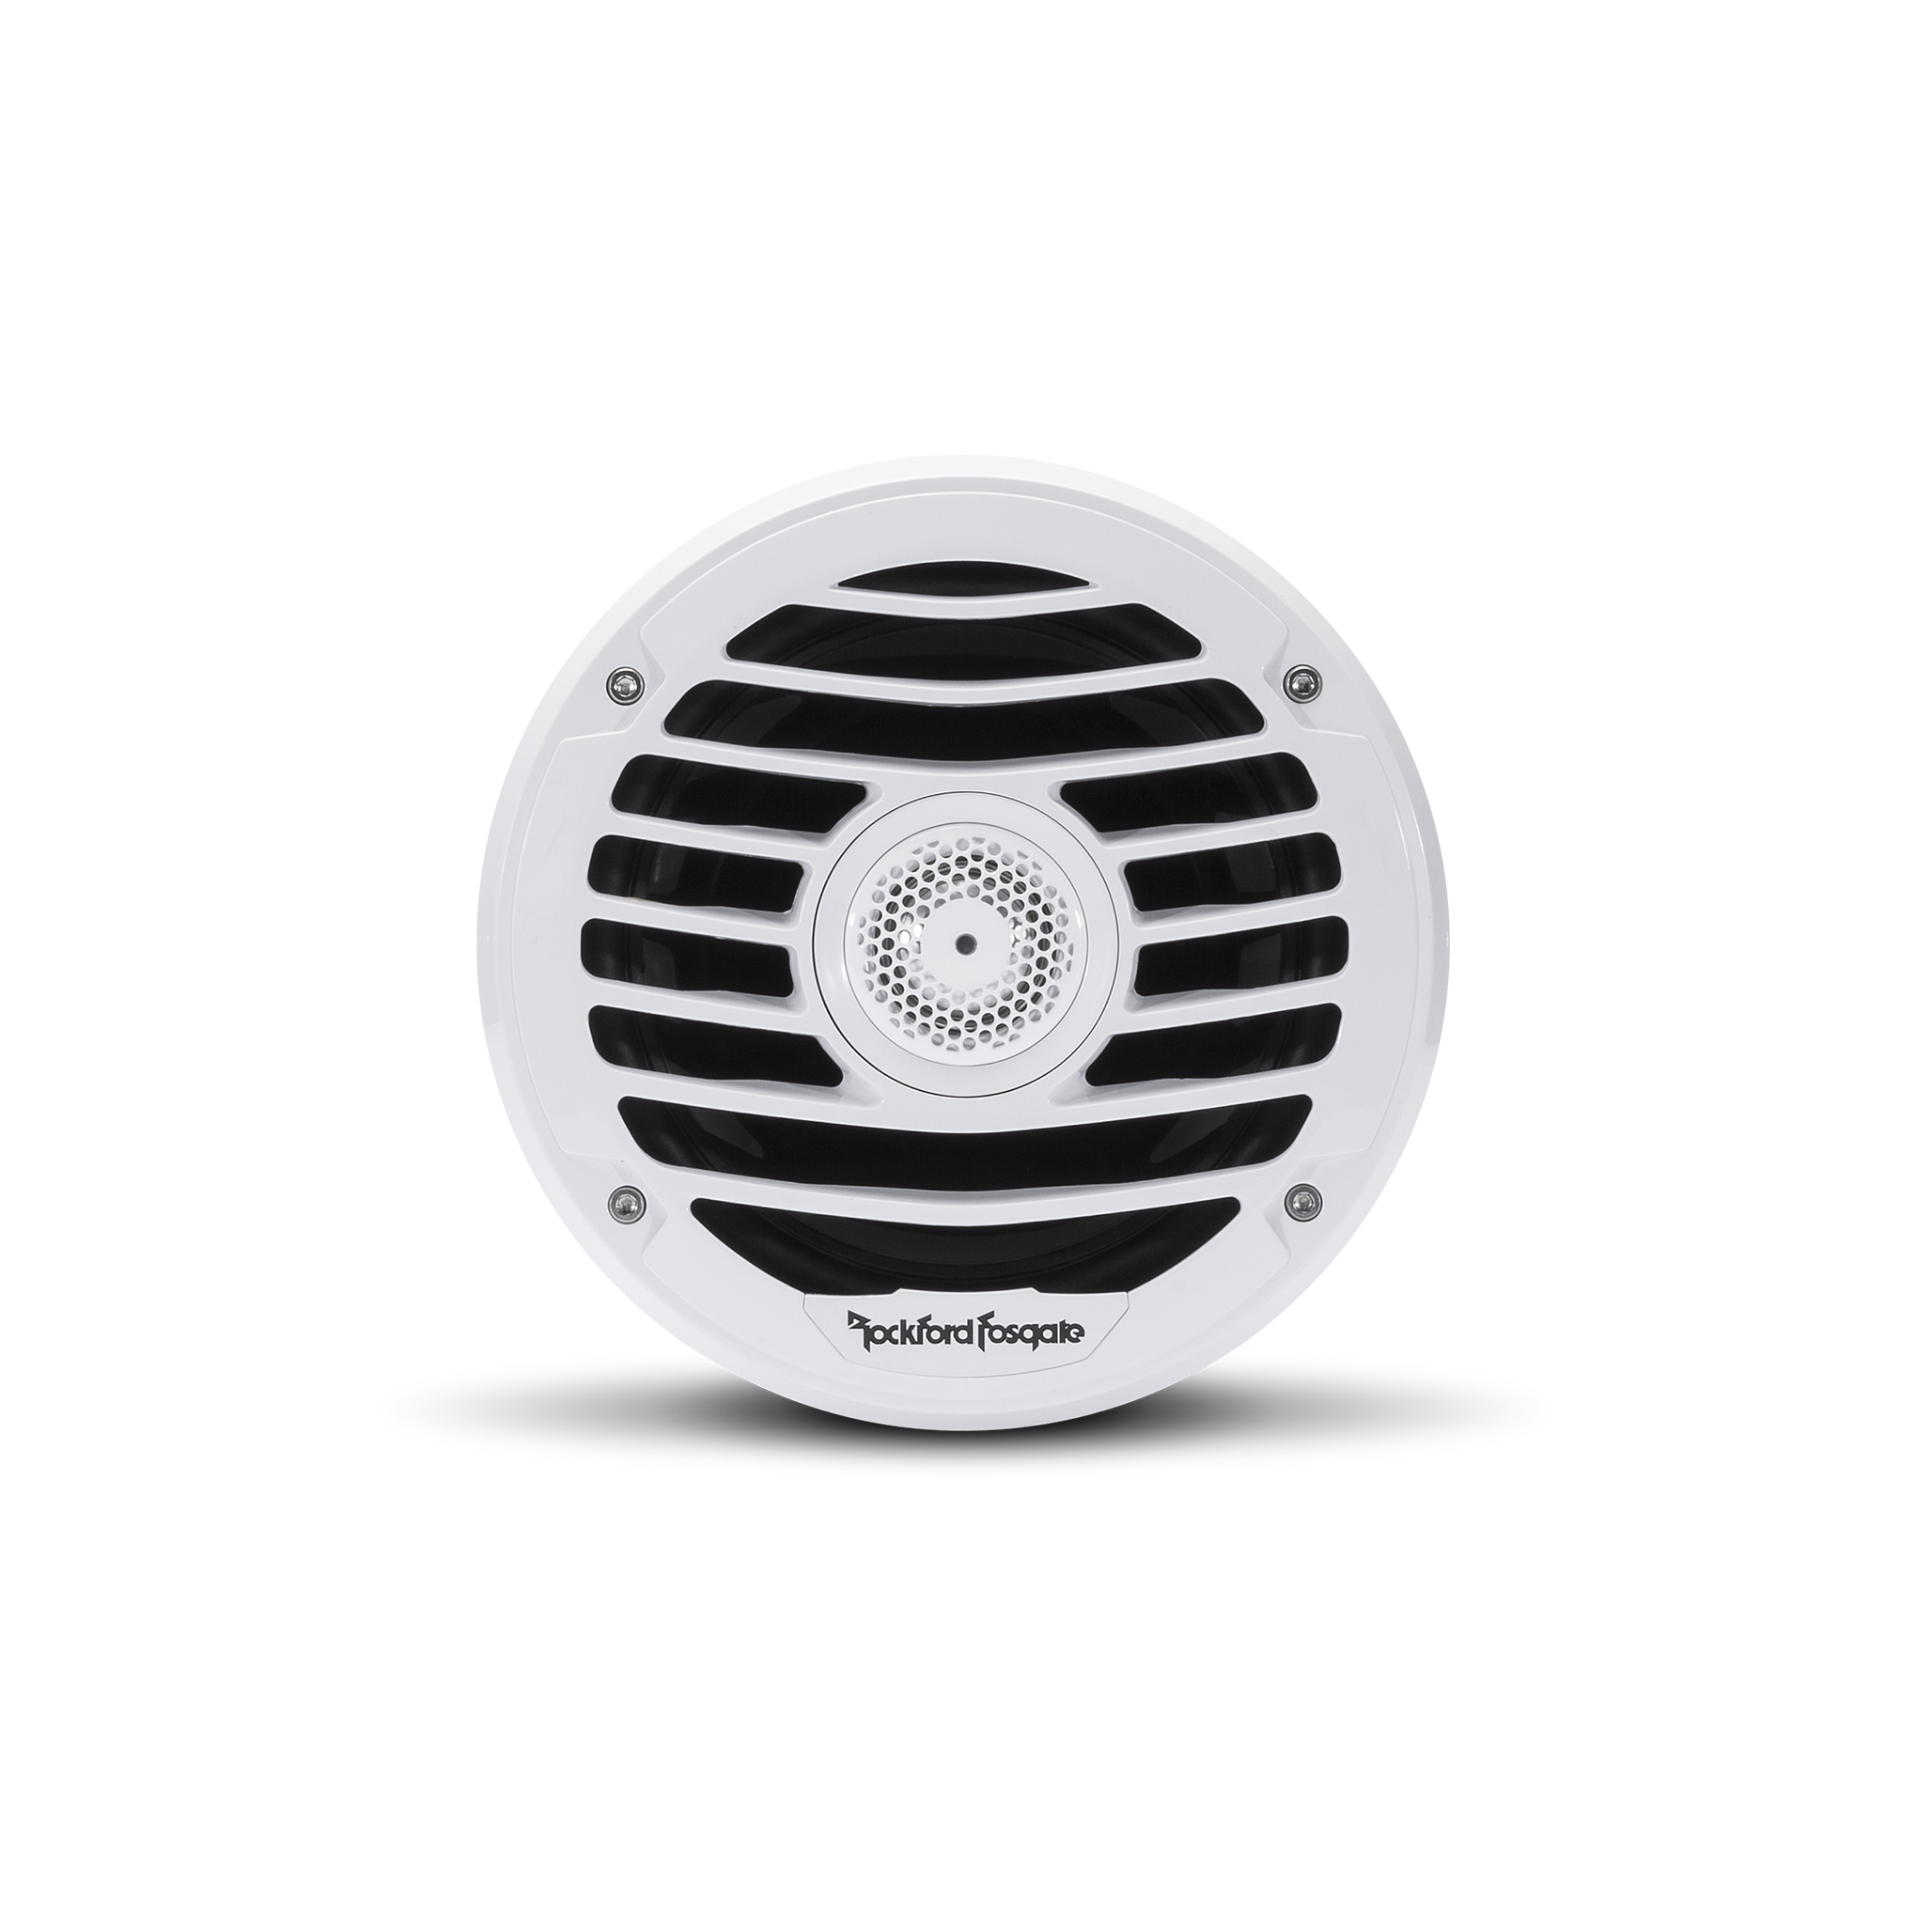 Rockford Fosgate PM2652X 6.5" 2-way Marine Full Range Speakers White Pair OPEN# 